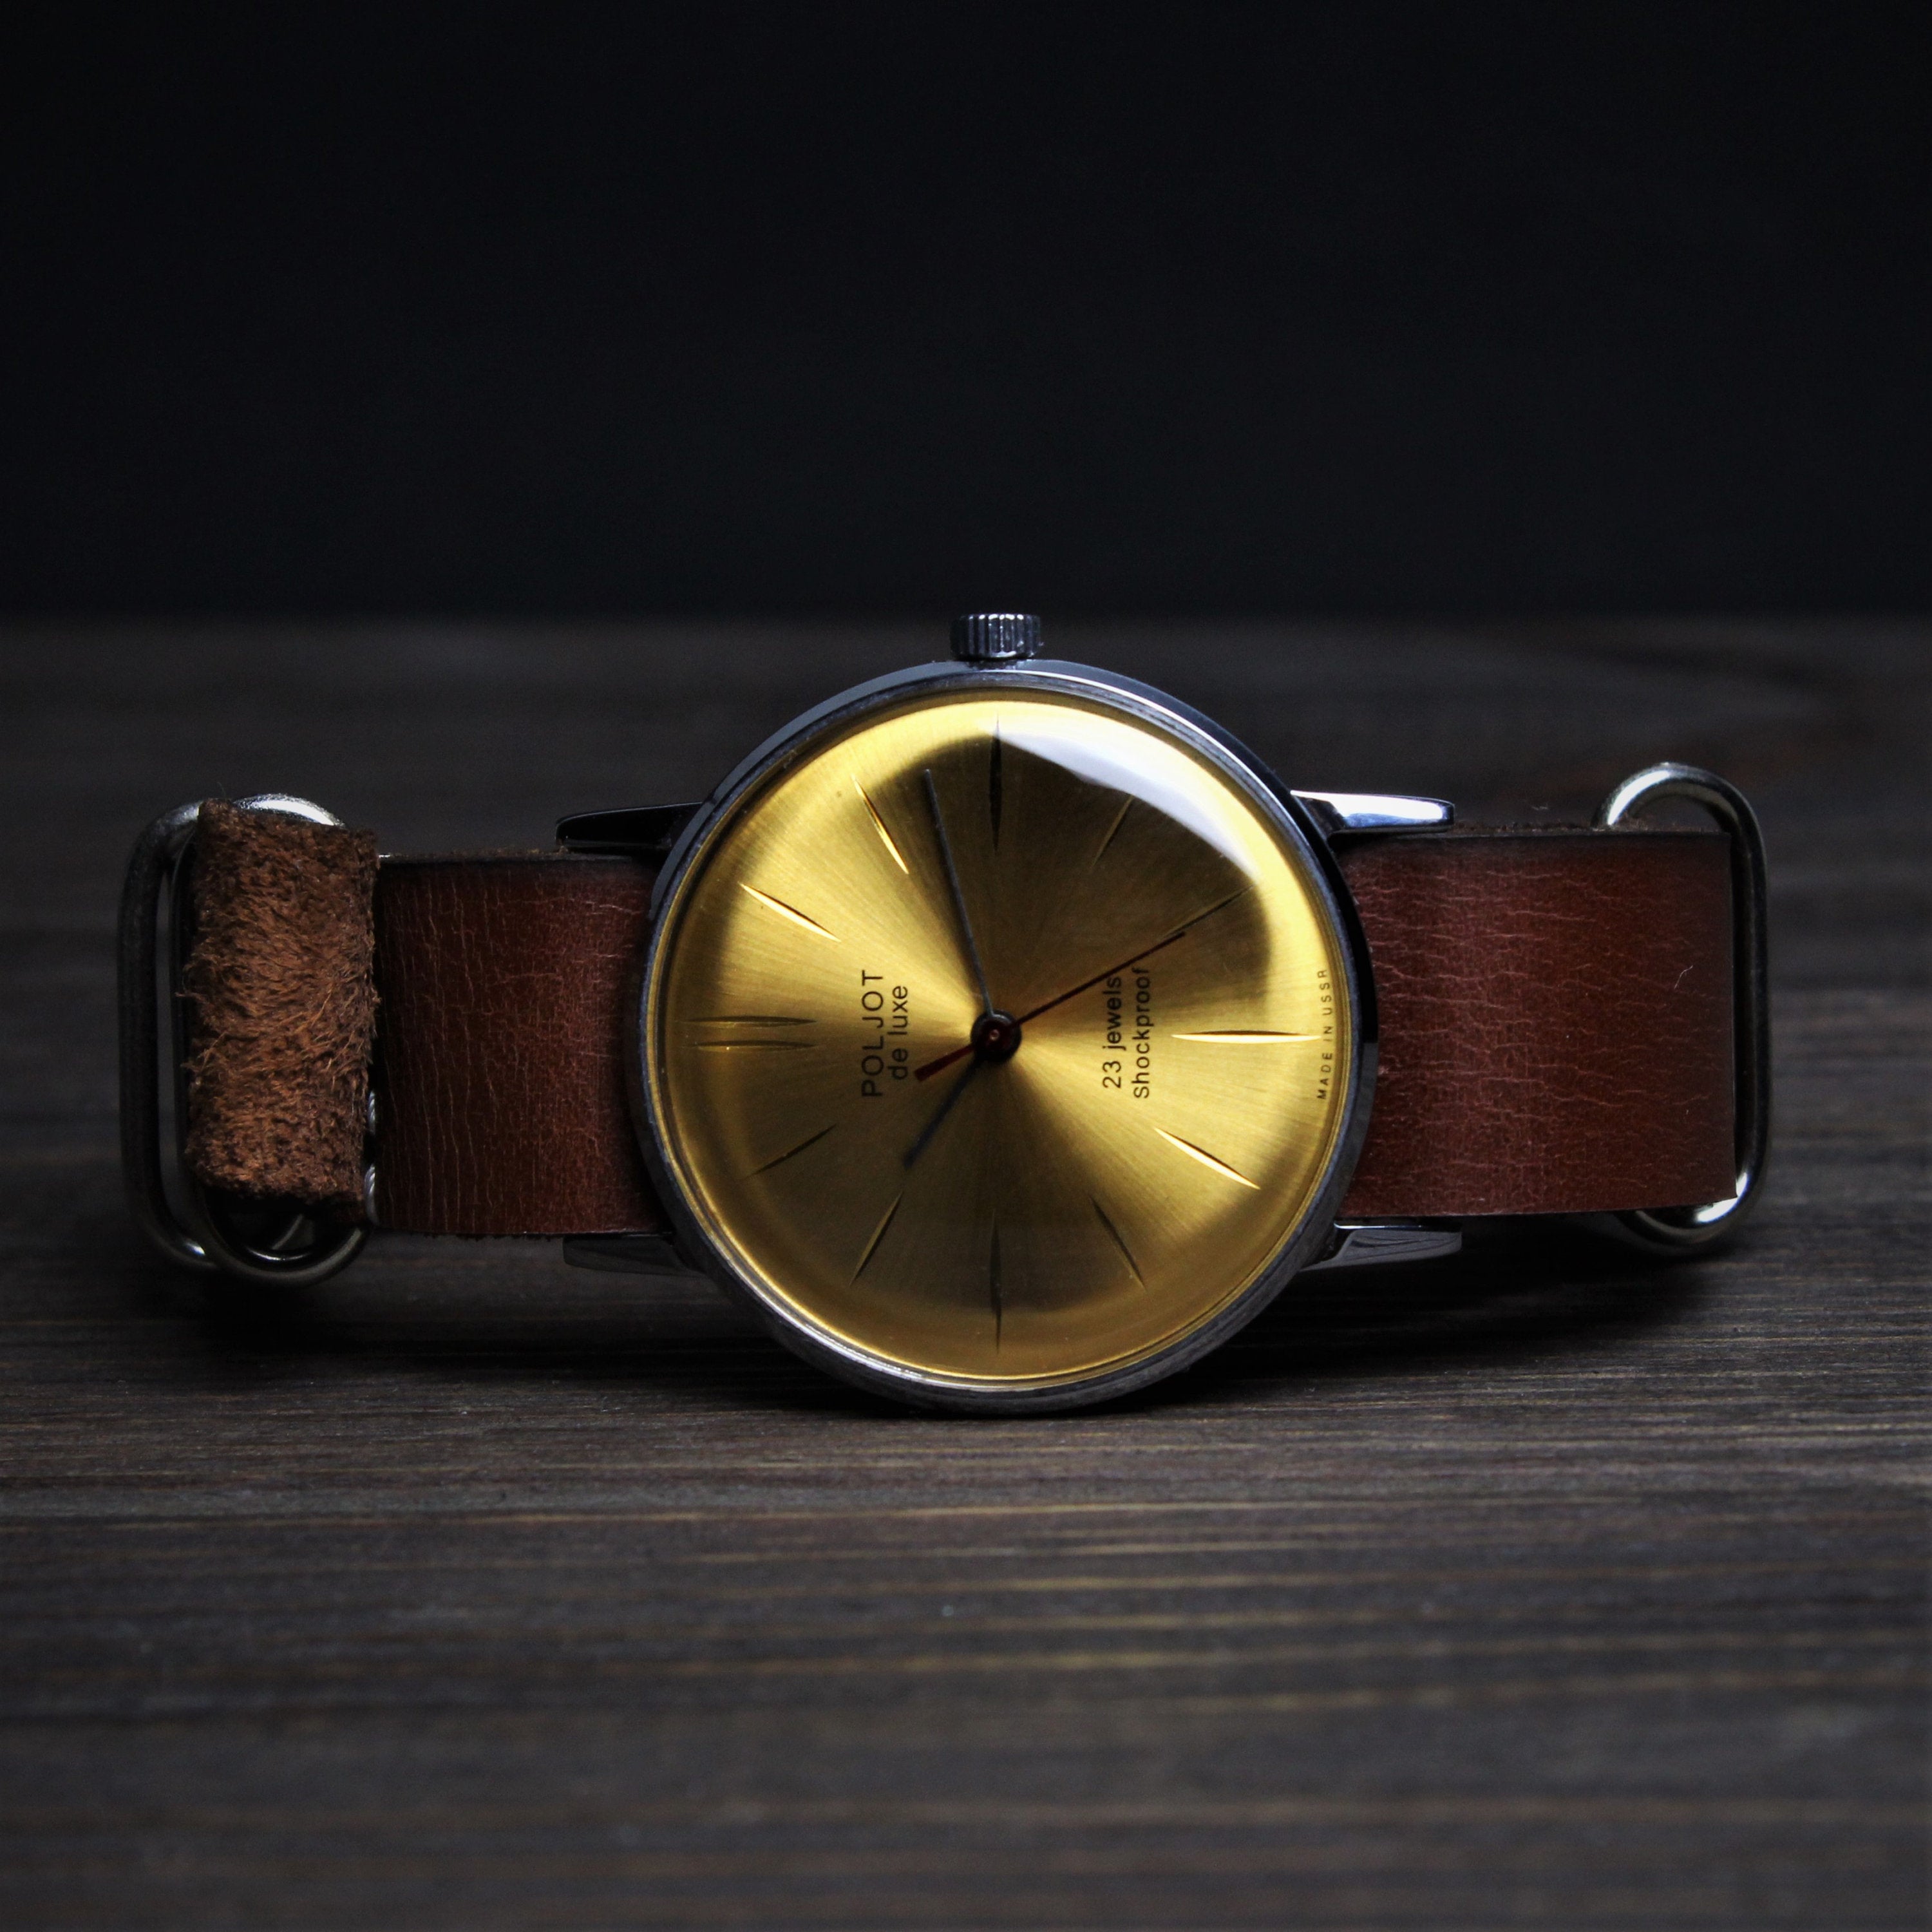 Soviet vintage rare mechanical men's watch Poljot de luxe with leather nato strap